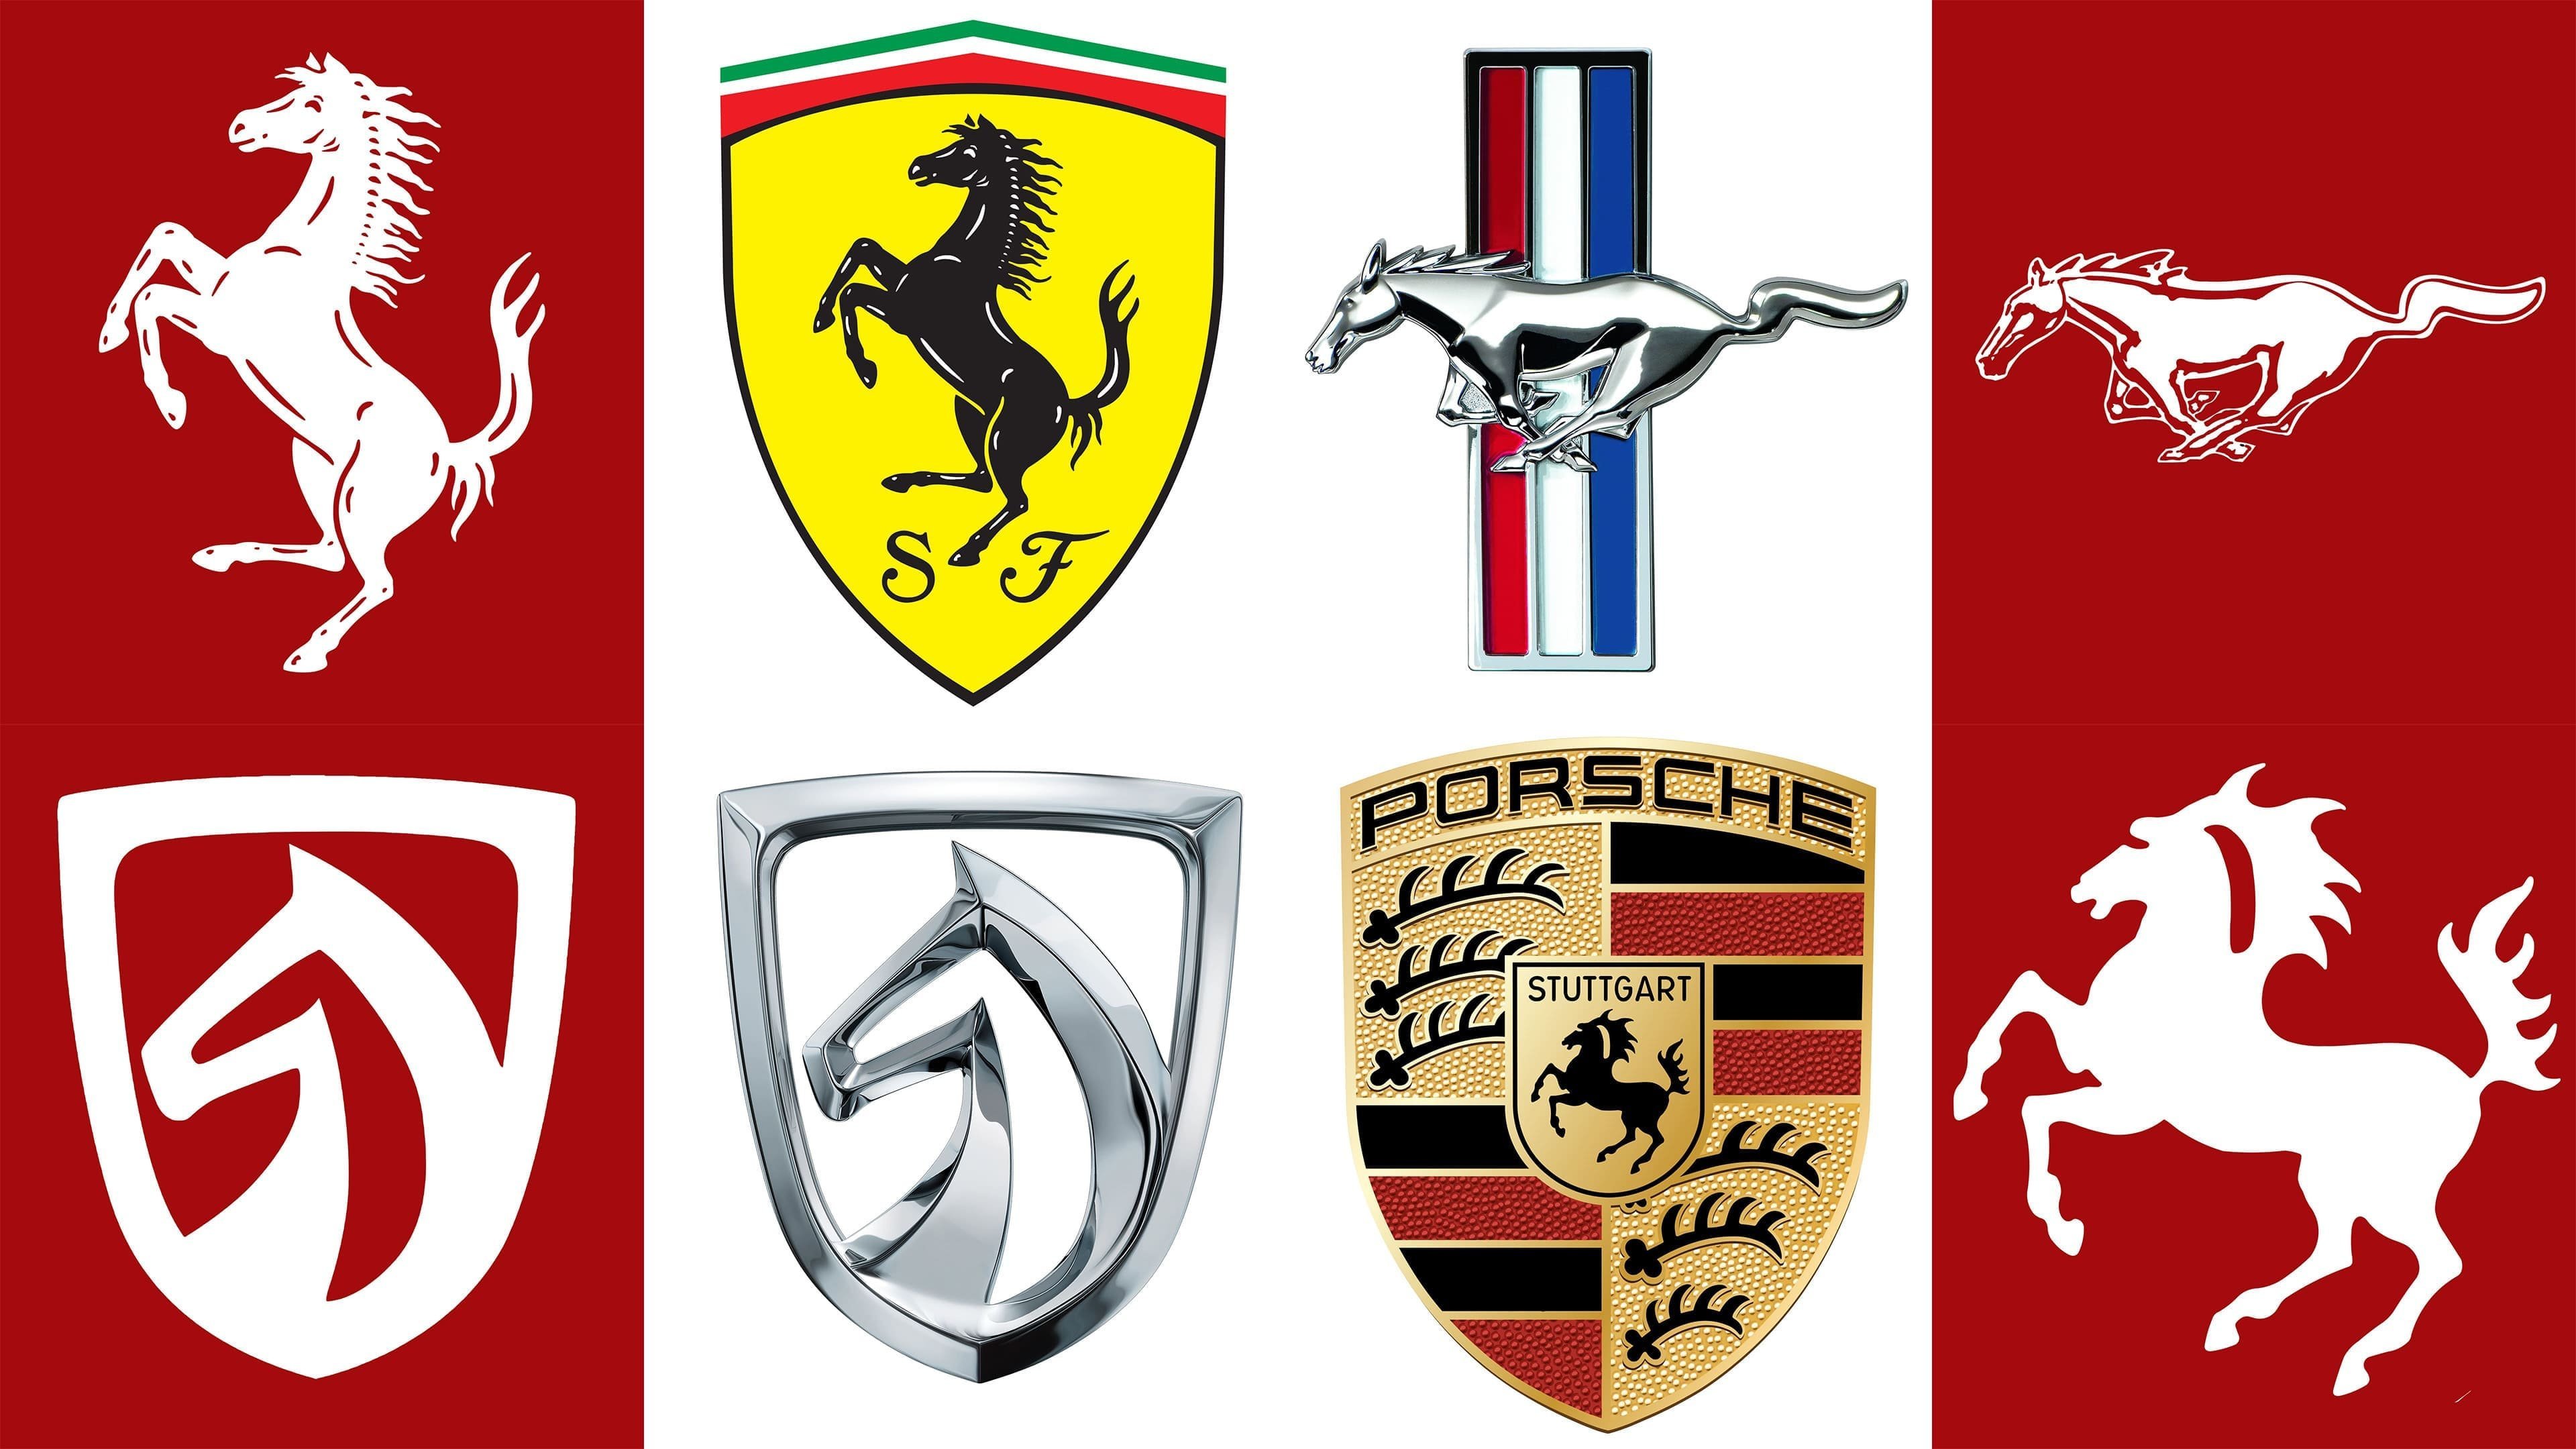 Машина с лошадью на эмблеме. Машина с логотипом лошади. Авто с лошадью на эмблеме. Эмблема конь на автомобиле. Машина с эмблемой лошади.